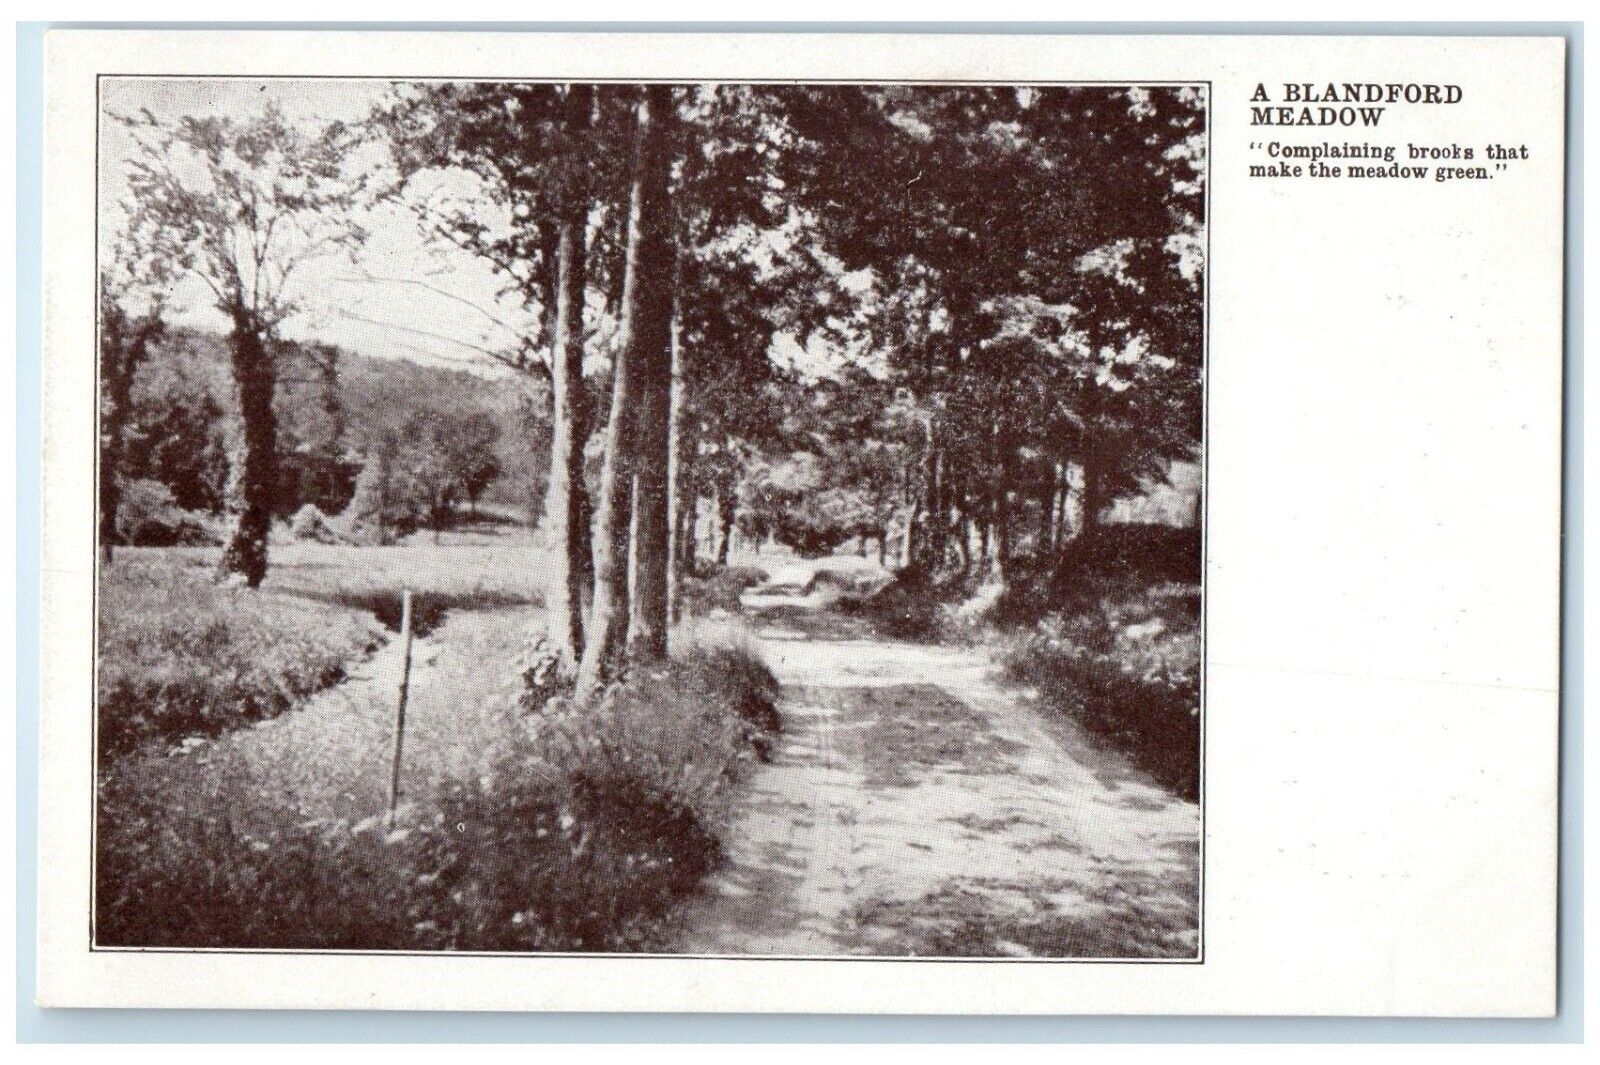 Blandford Massachusetts Postcard Meadow Complaining Books Make Meadow Green 1905